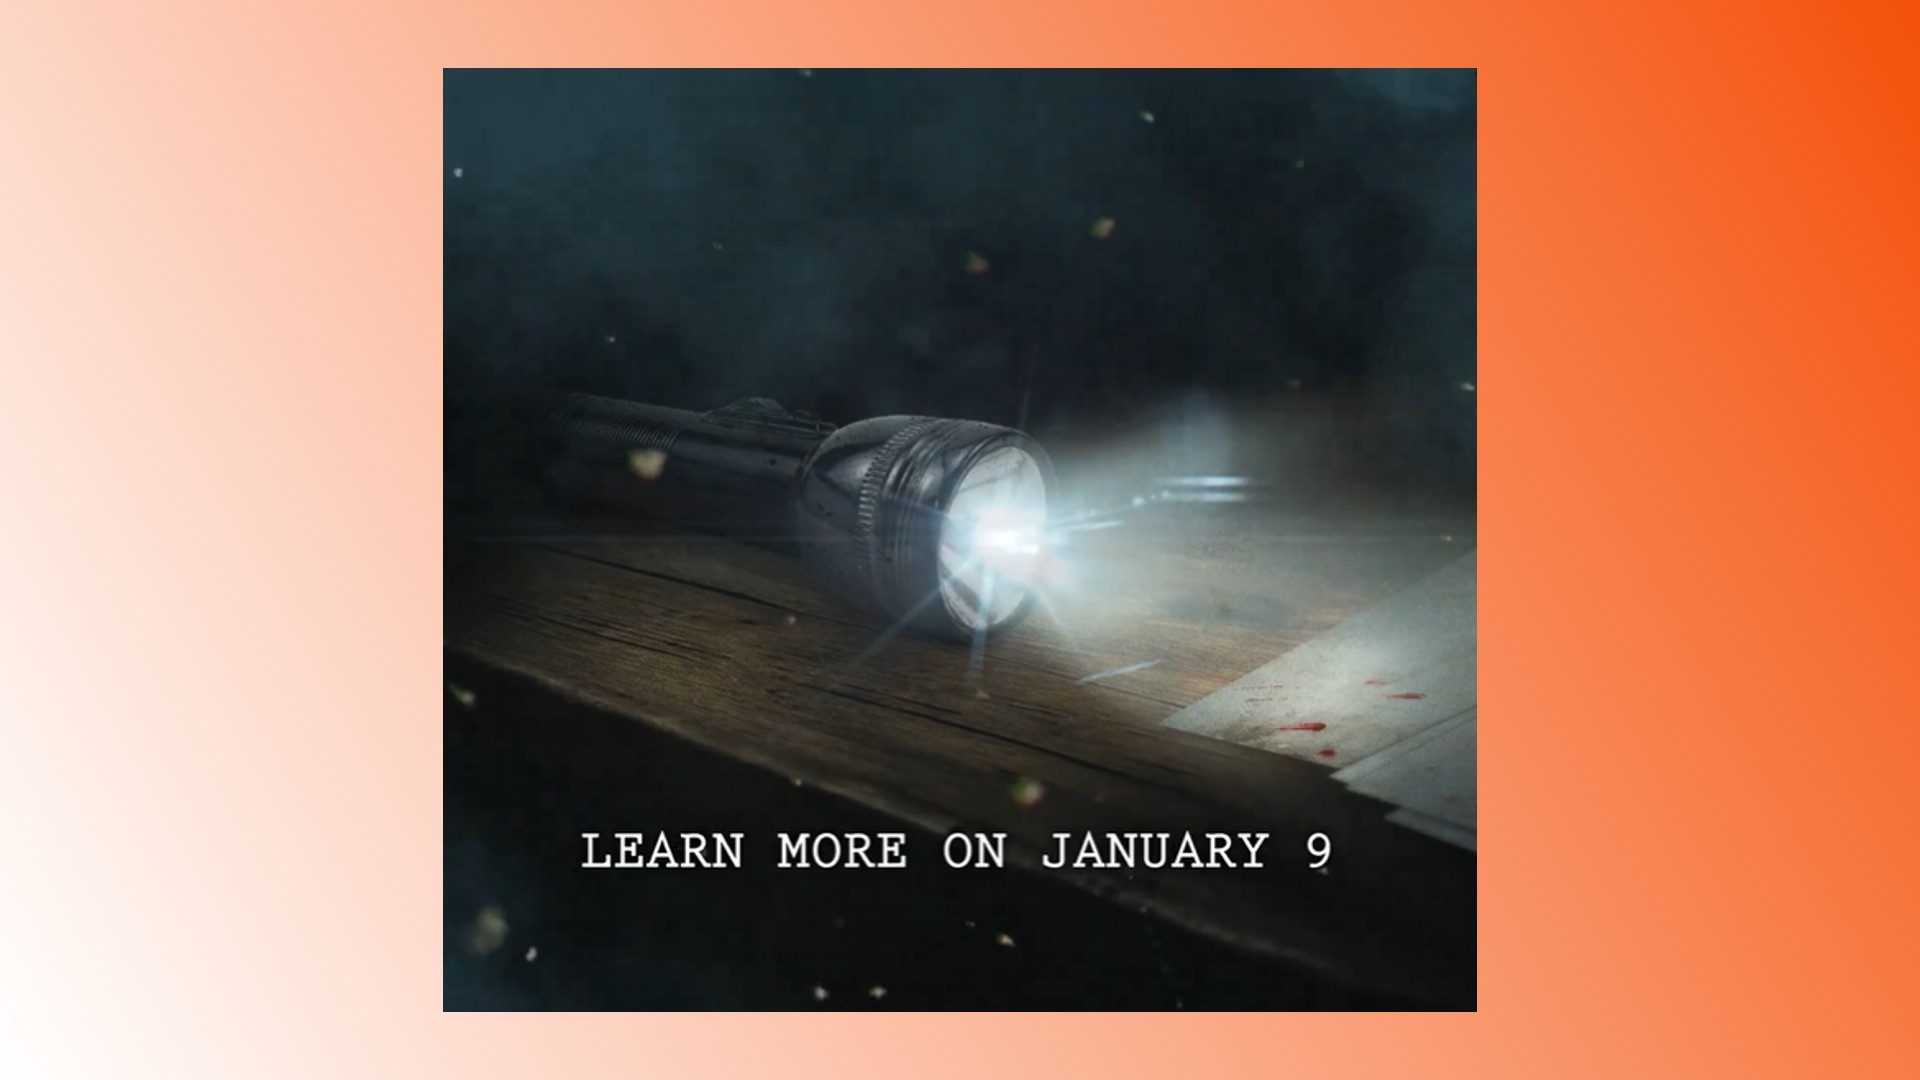 Dead by Daylight new survivor: A teaser image from BHVR, developer of horror game Dead by Daylight